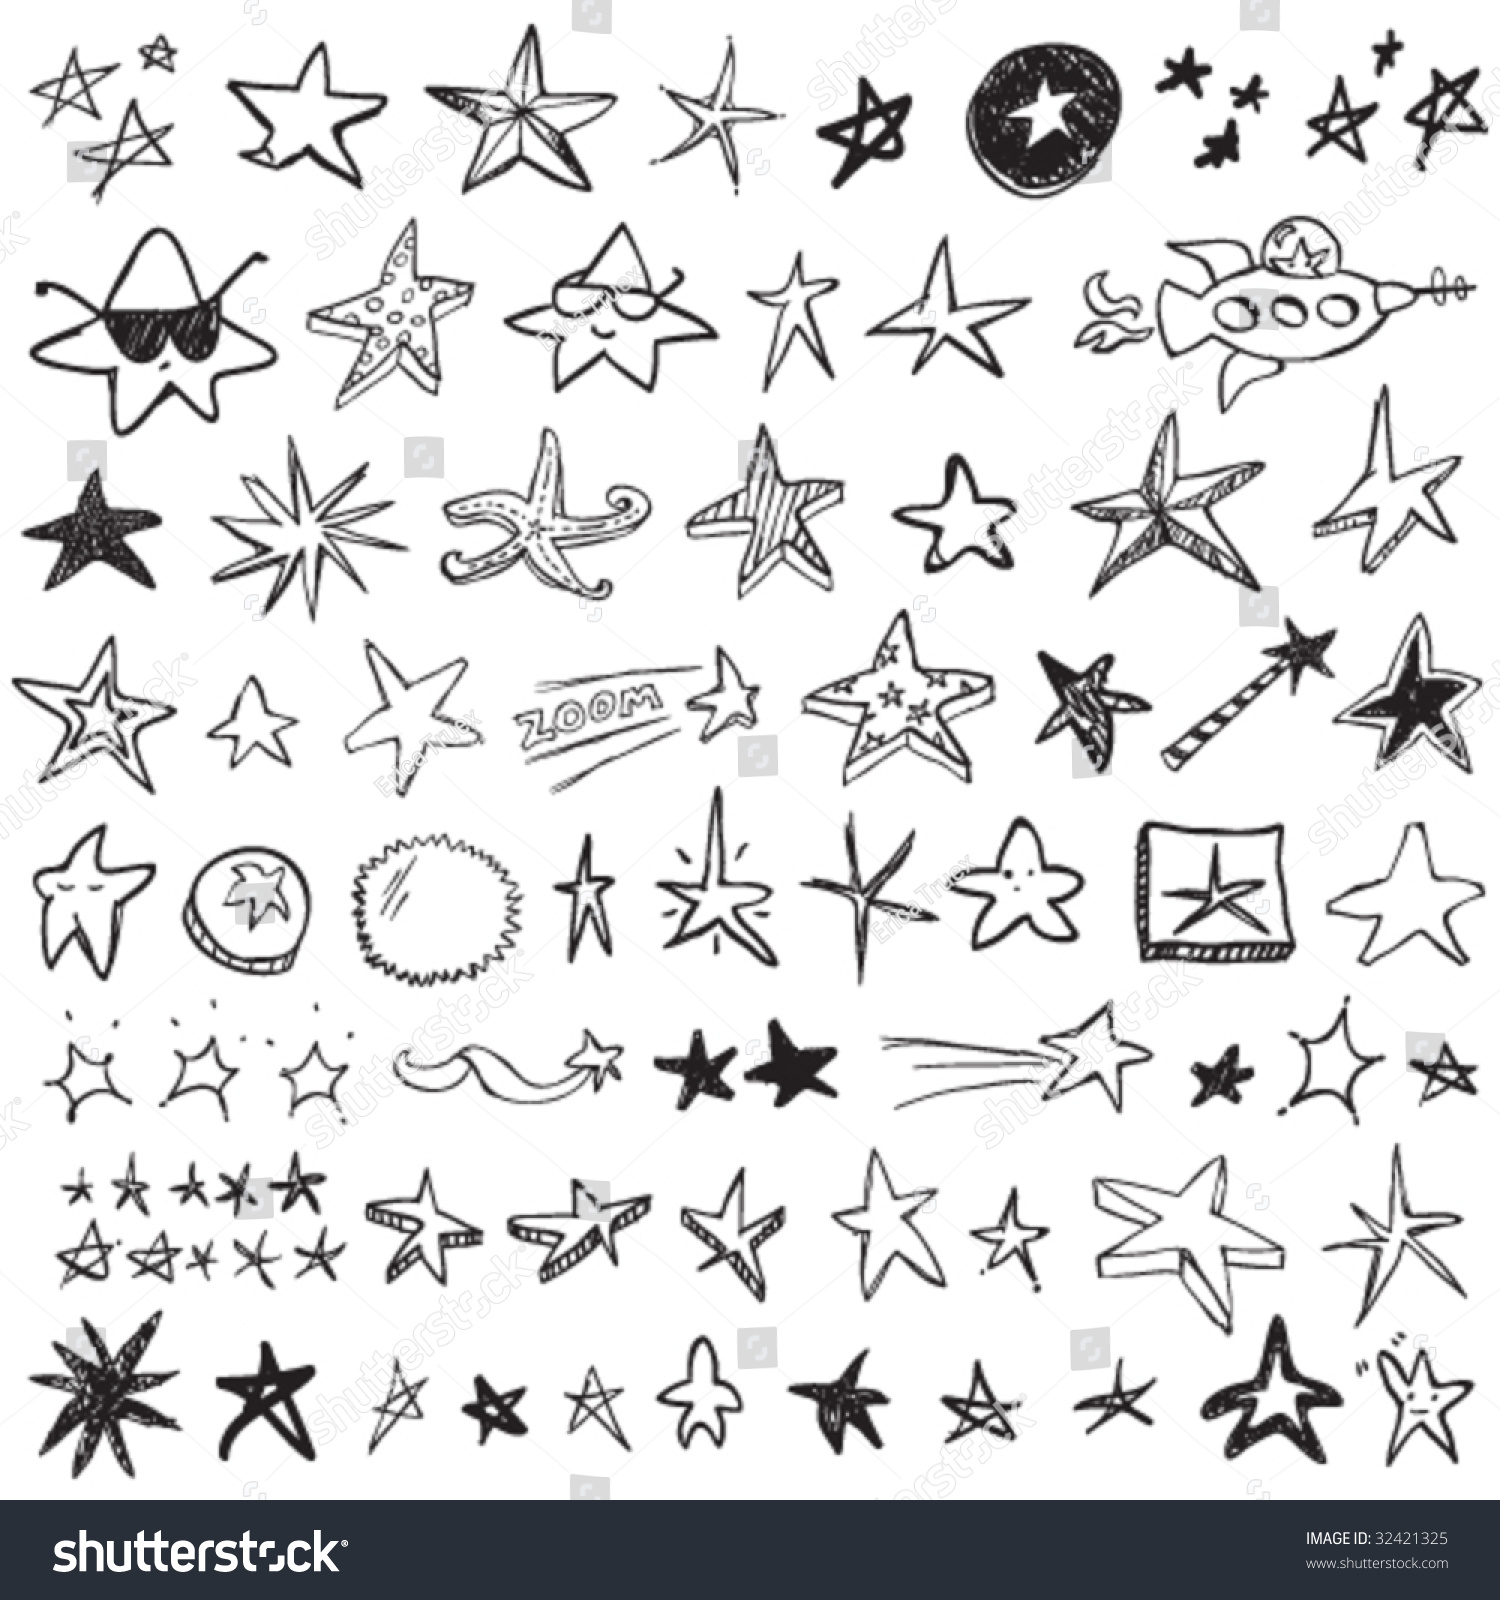 Star Doodles Stok Vektör (Telifsiz) 32421325 - Shutterstock